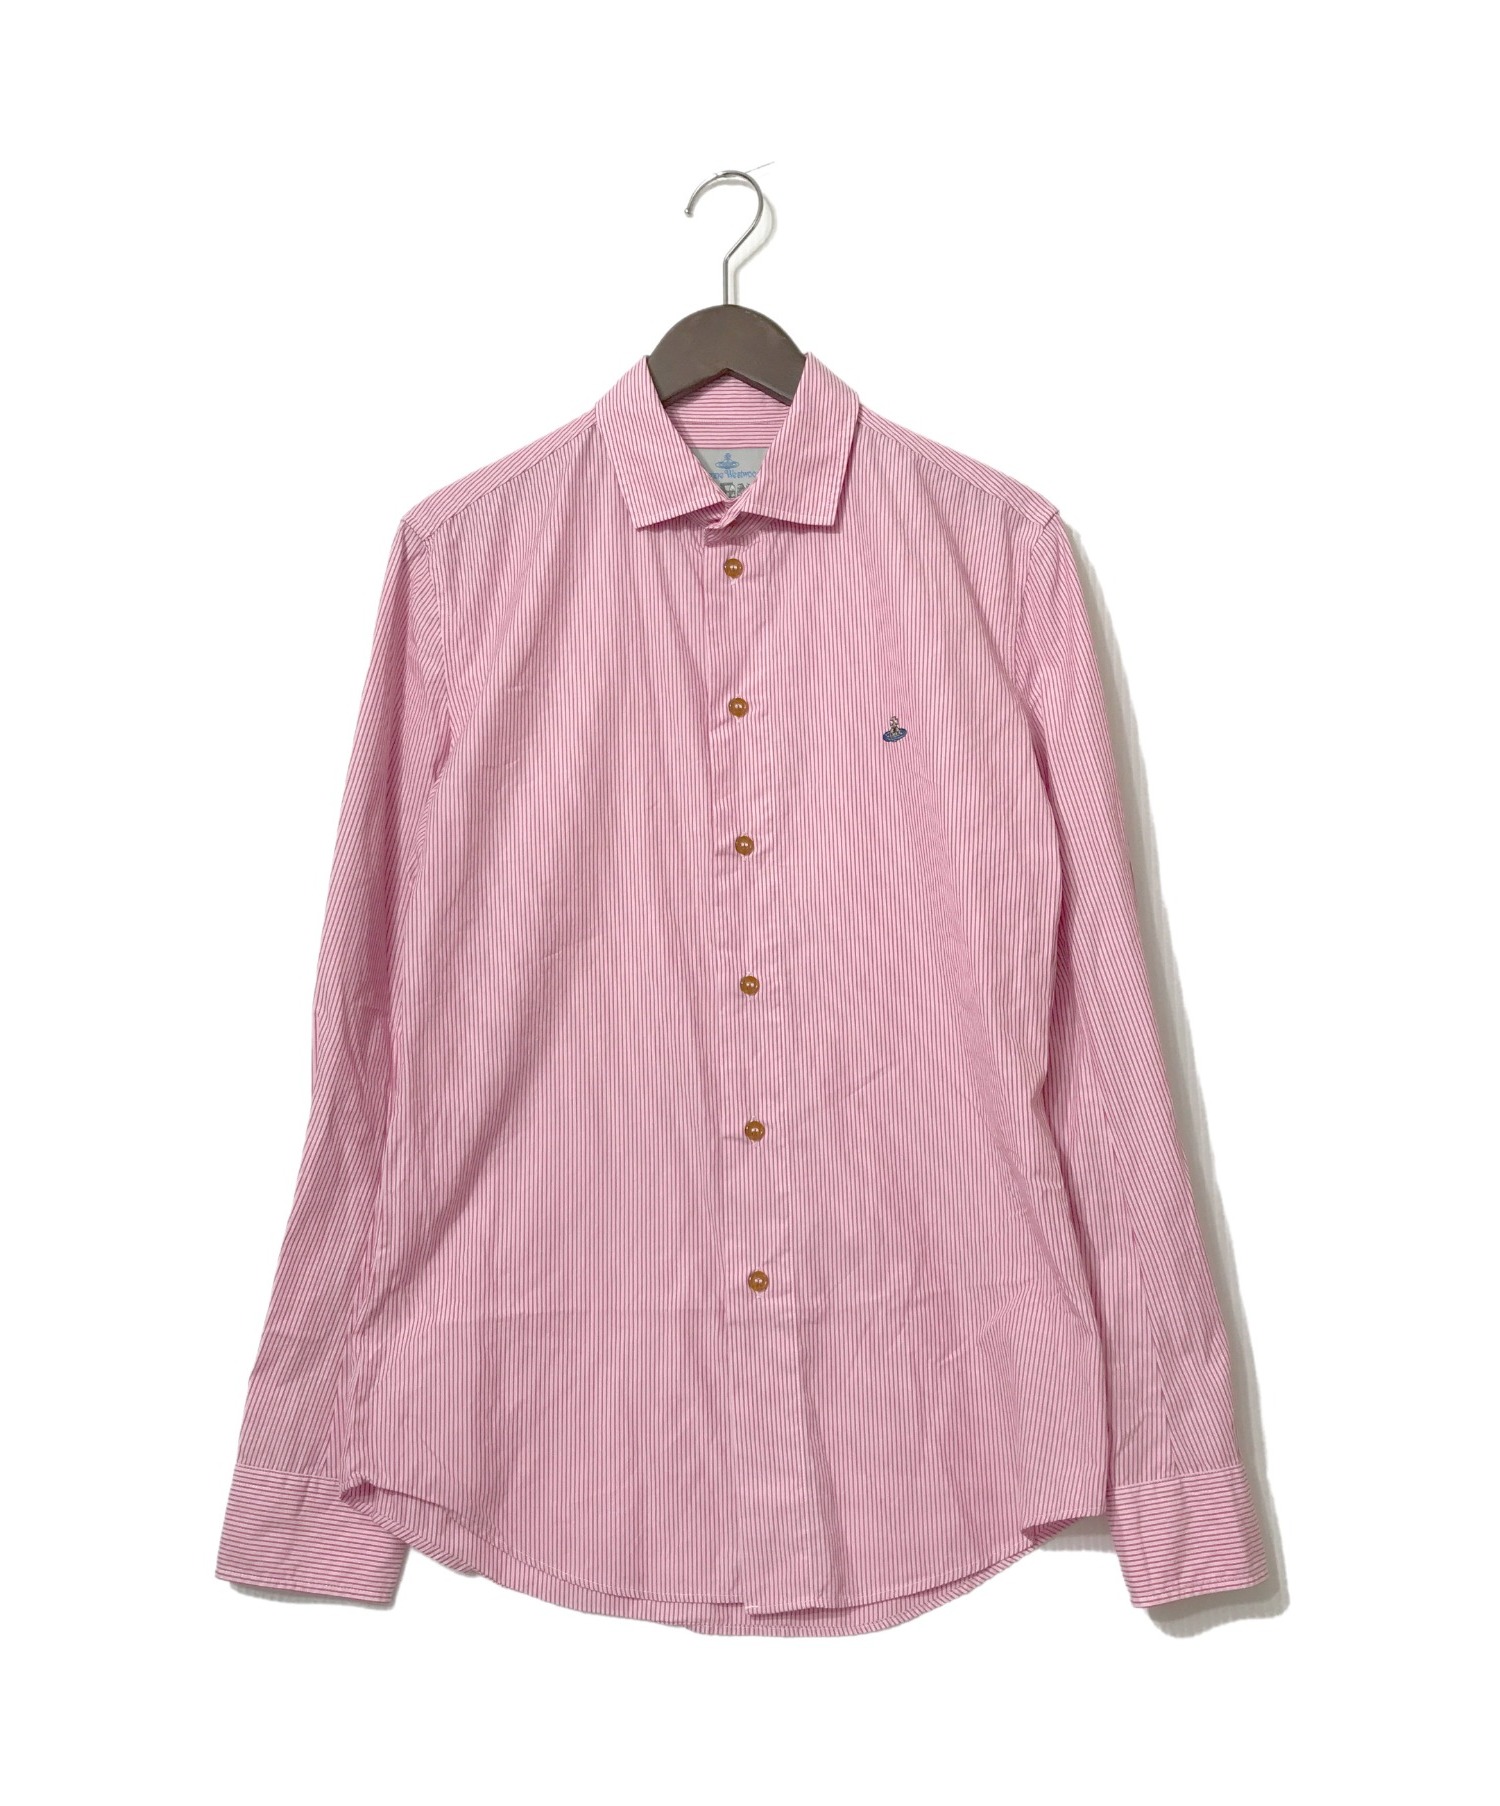 Vivienne Westwood man (ヴィヴィアン ウェストウッド マン) ストライプシャツ ピンク サイズ:46